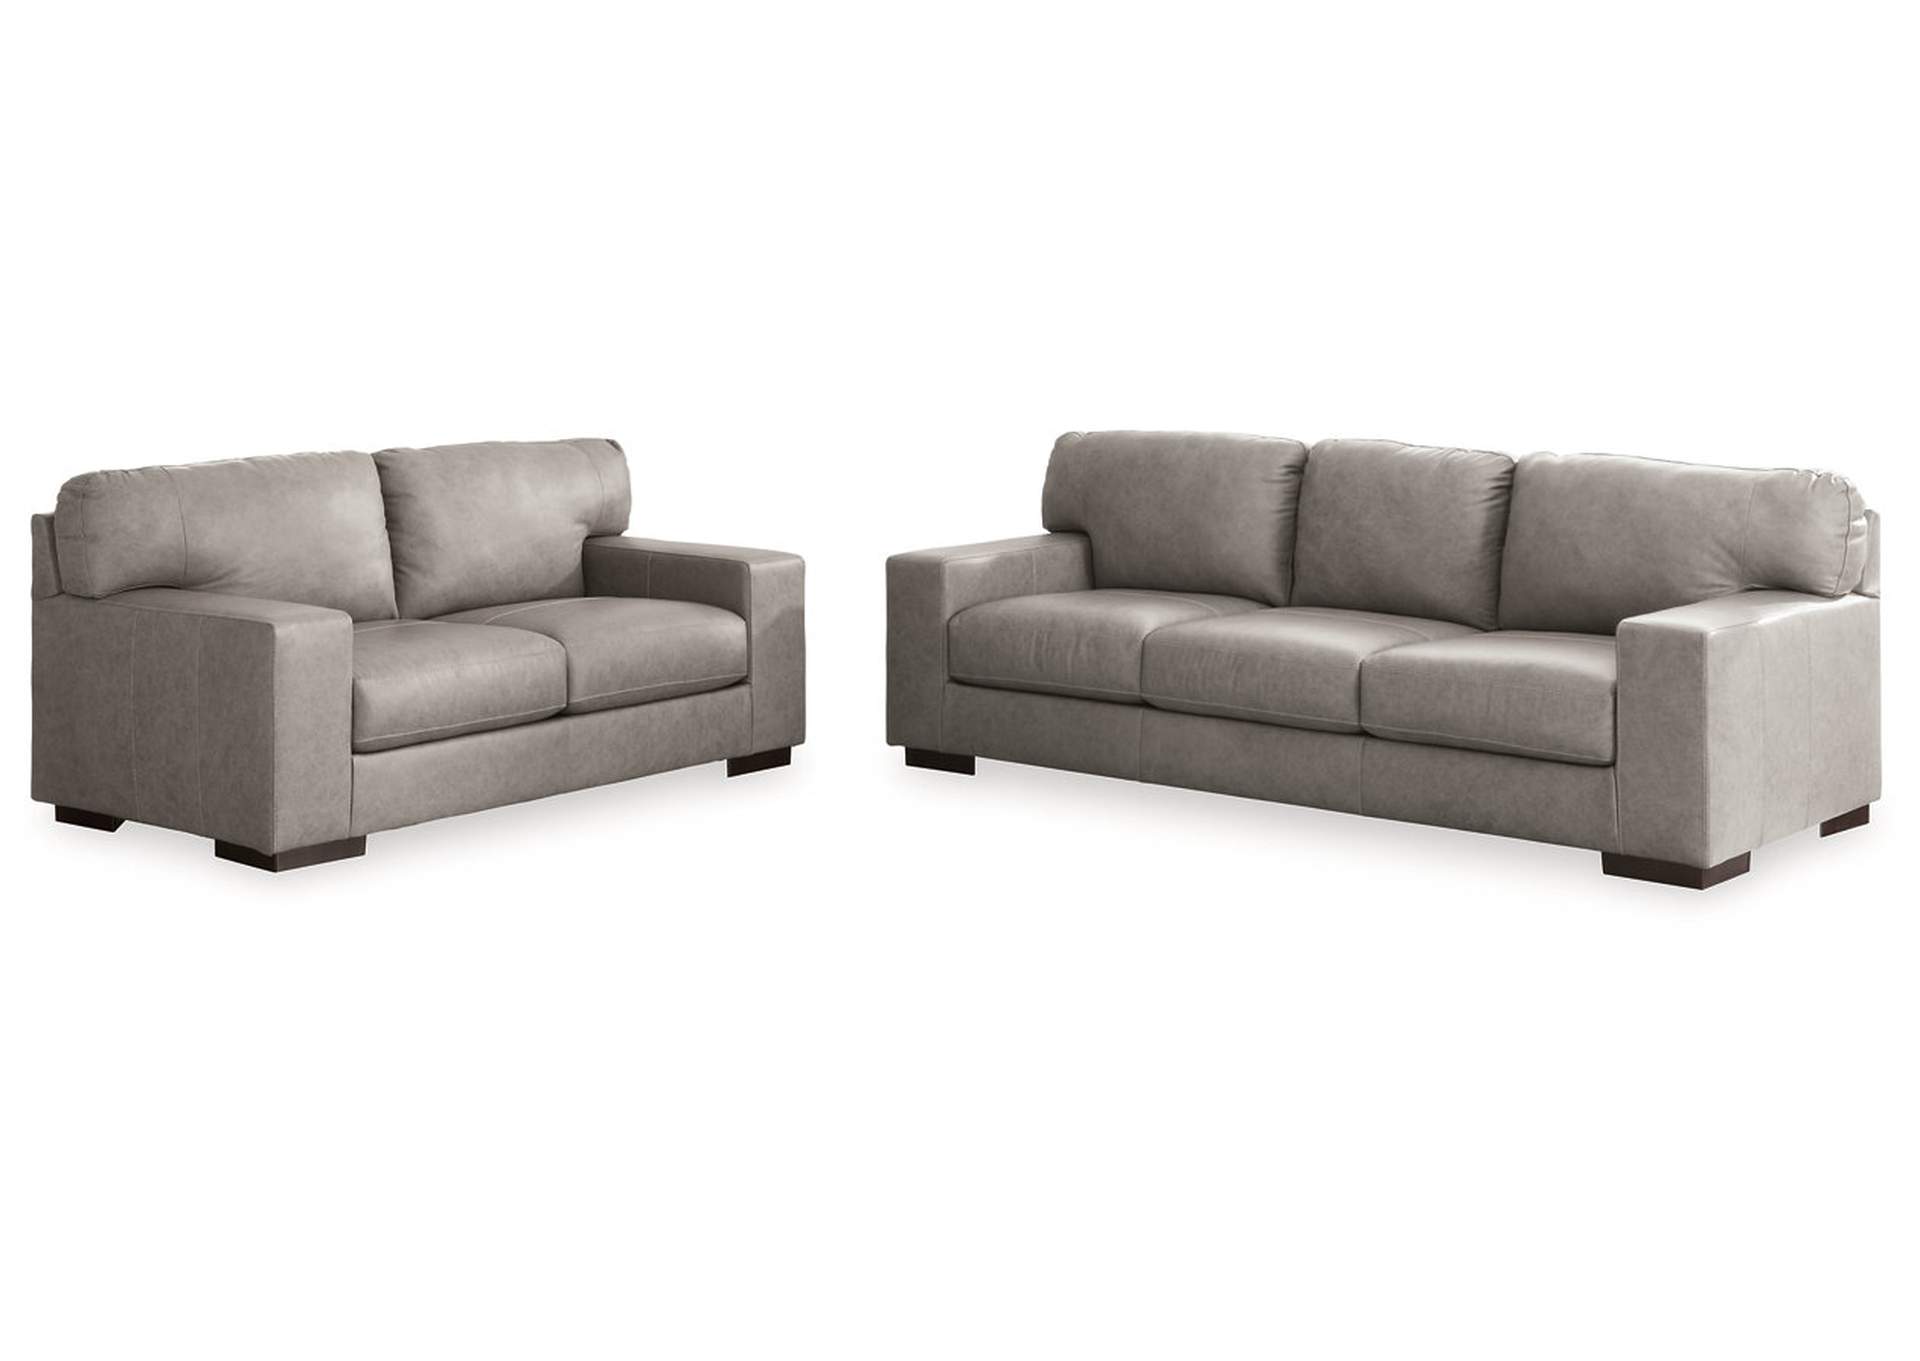 Lombardia Sofa and Loveseat,Millennium